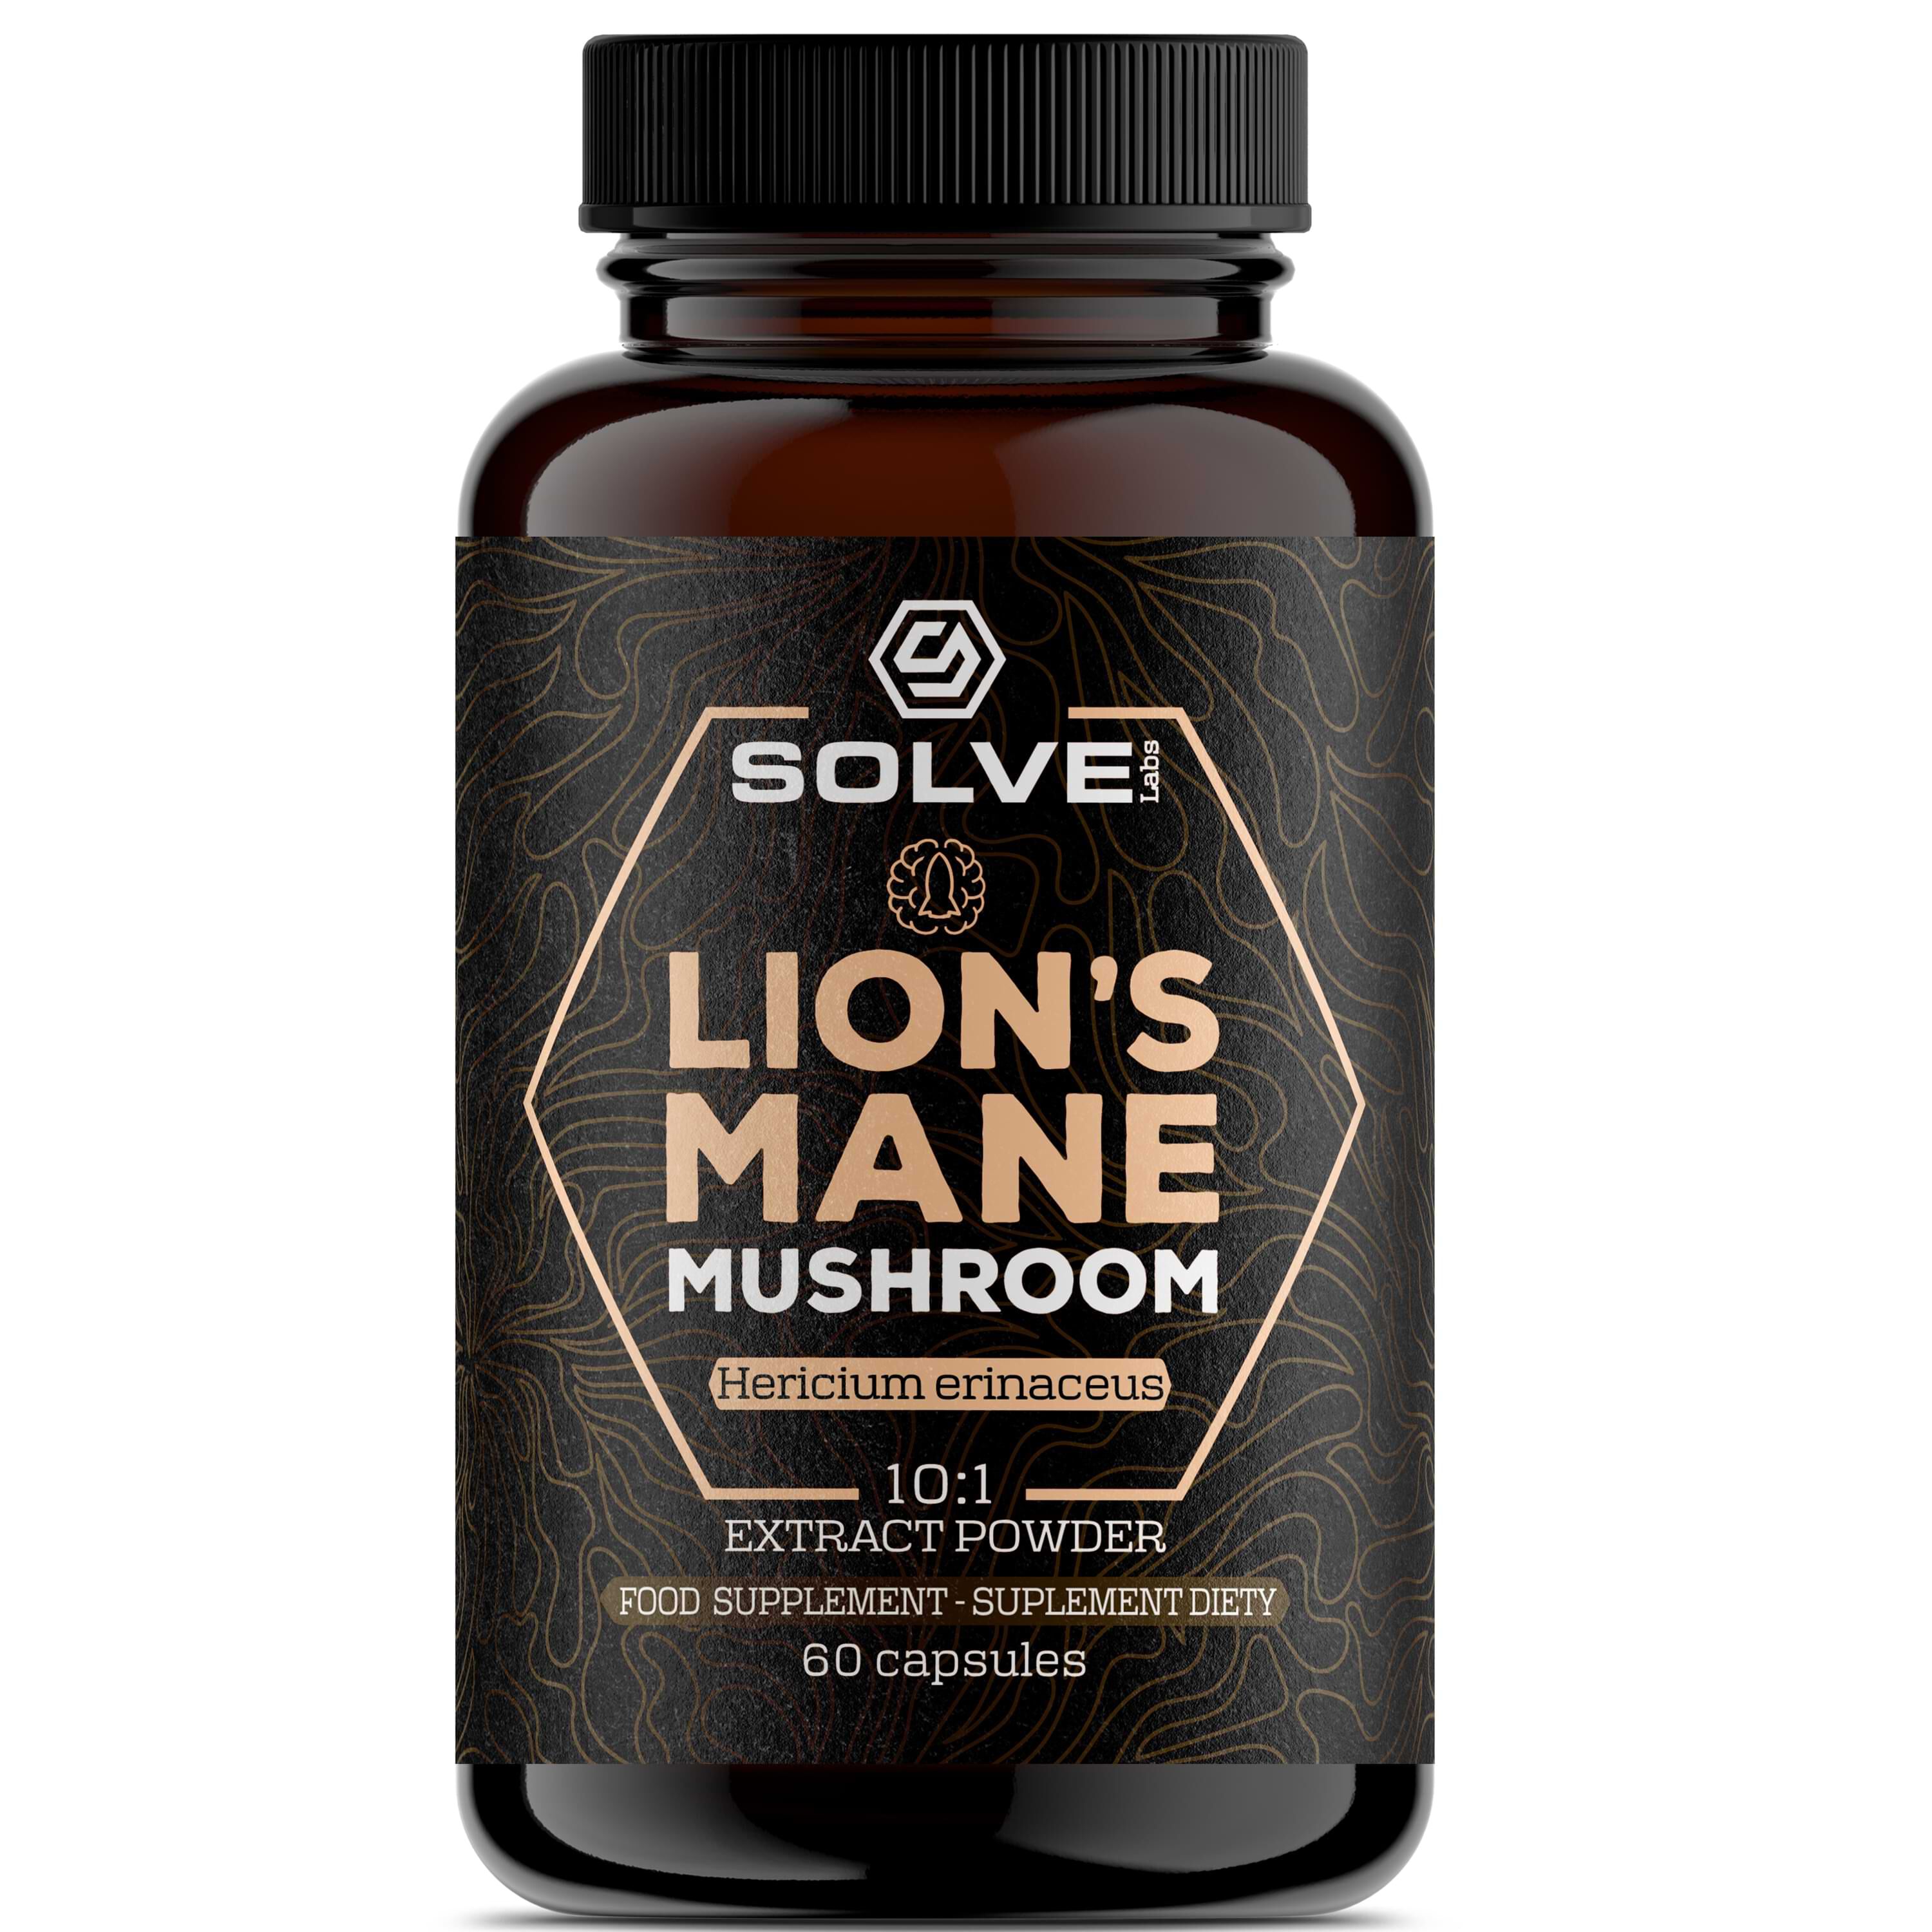 Solve Labs Lion's Mane пищевая добавка с экстрактами грибов 10:1, 60 капсул/1 упаковка